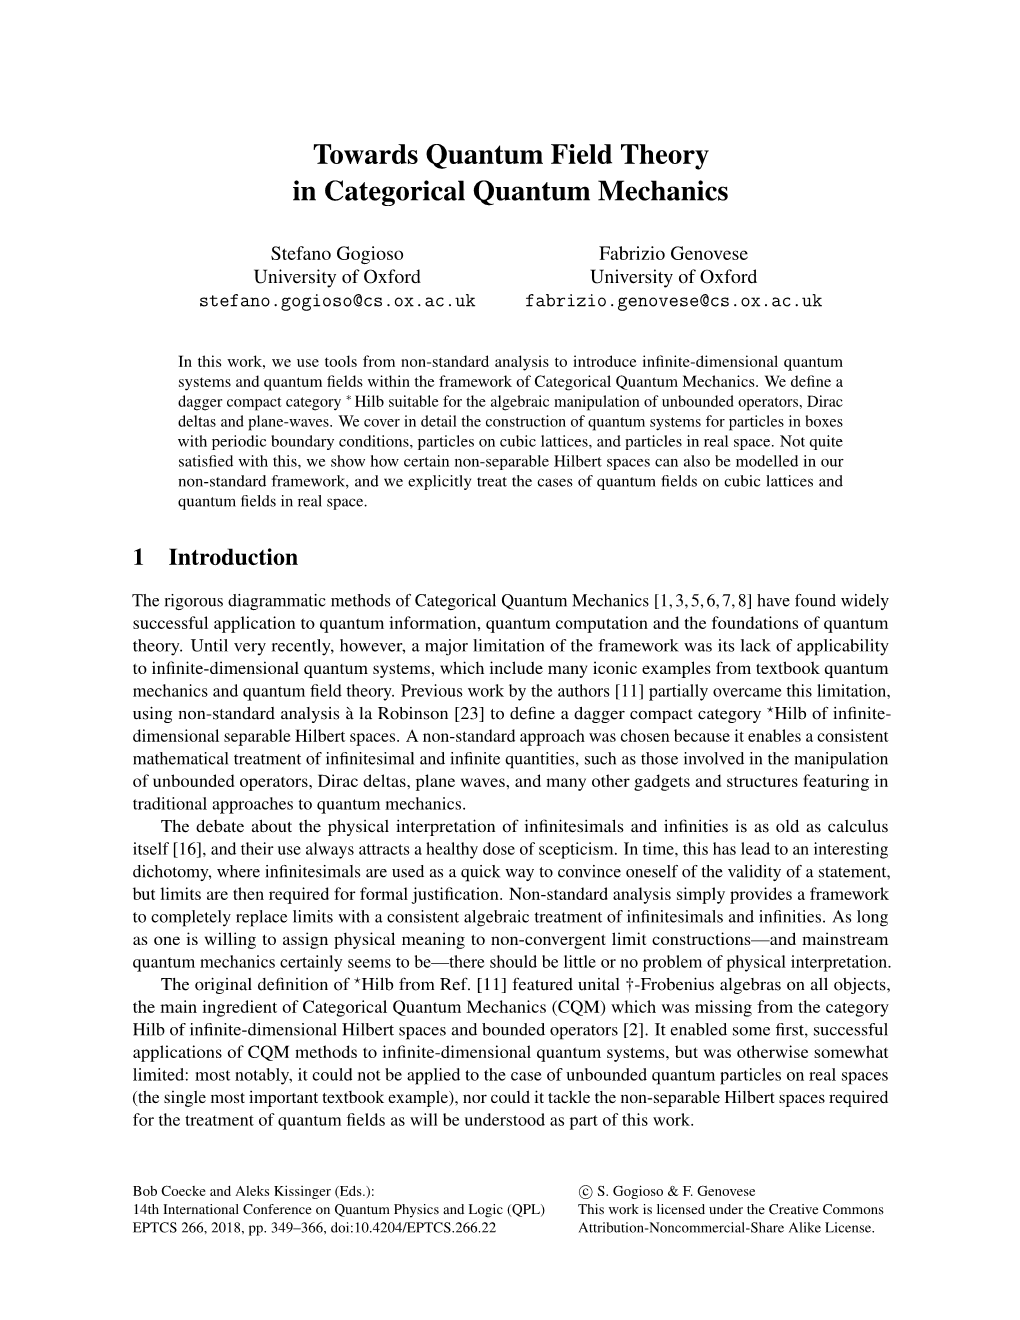 Towards Quantum Field Theory in Categorical Quantum Mechanics